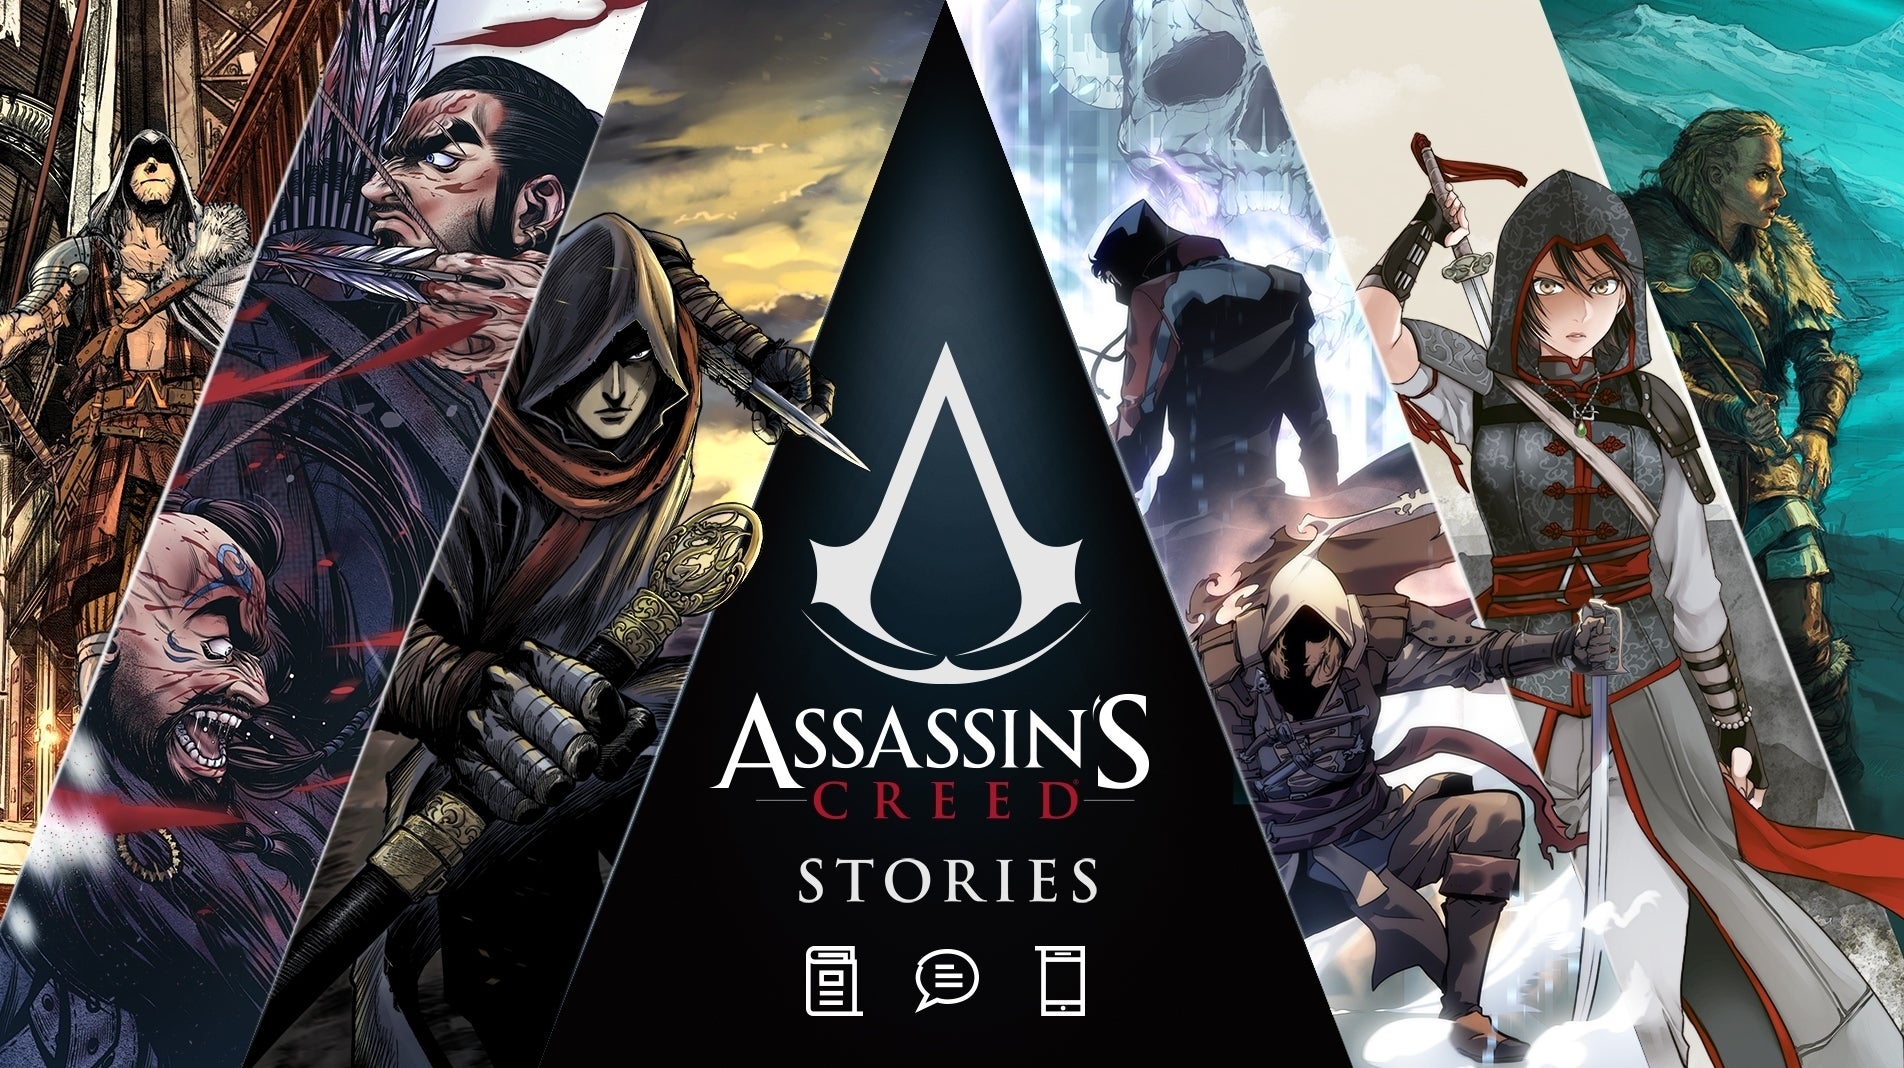 Image for Ubisoft details Assassin's Creed Black Flag webtoon sequel, Shao Jun books, Netflix projects